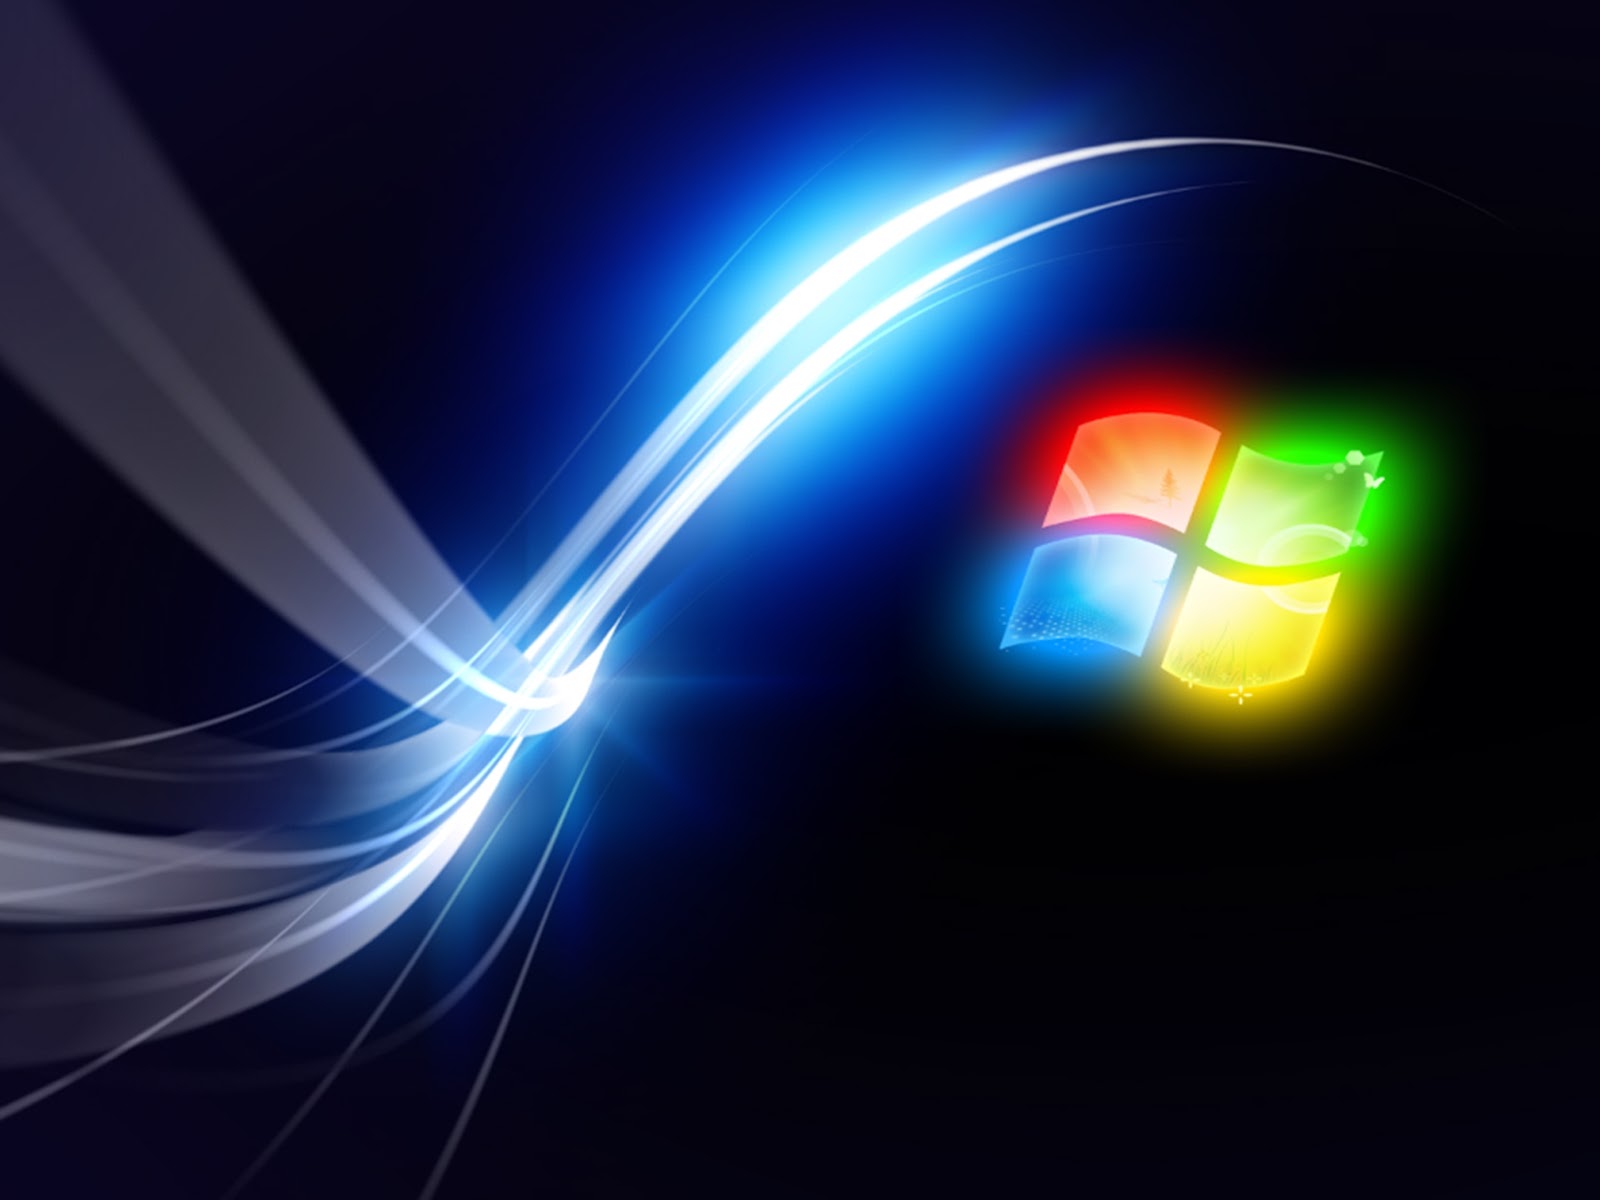 Windows Shiny Desktop Wallpaper Cool Laptop